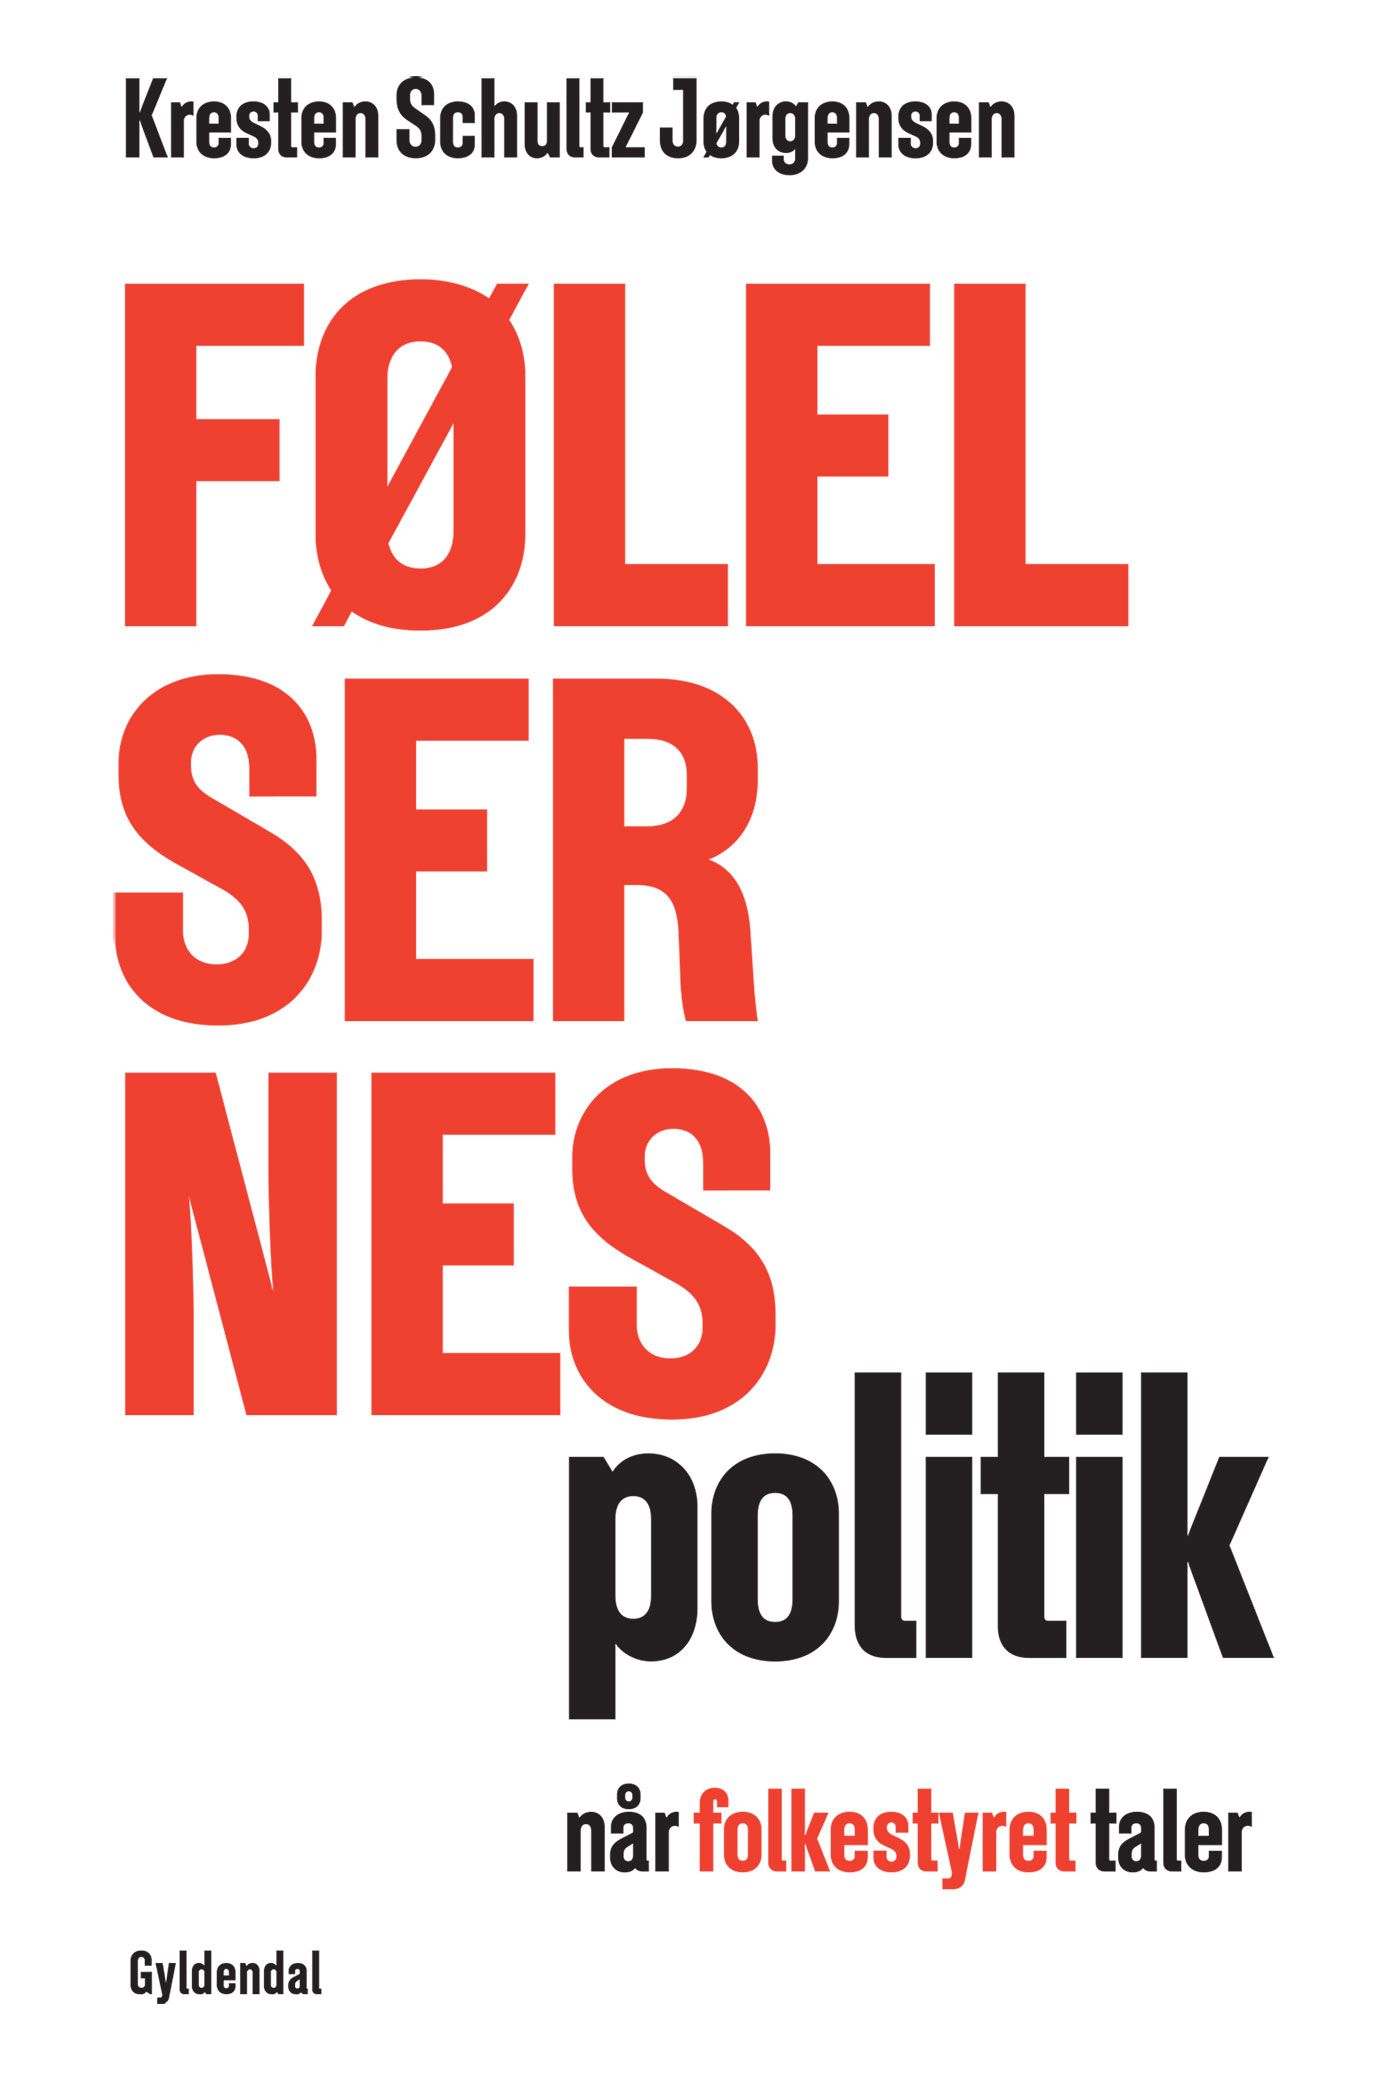 Følelsernes politik, eBook by Kresten Schultz Jørgensen